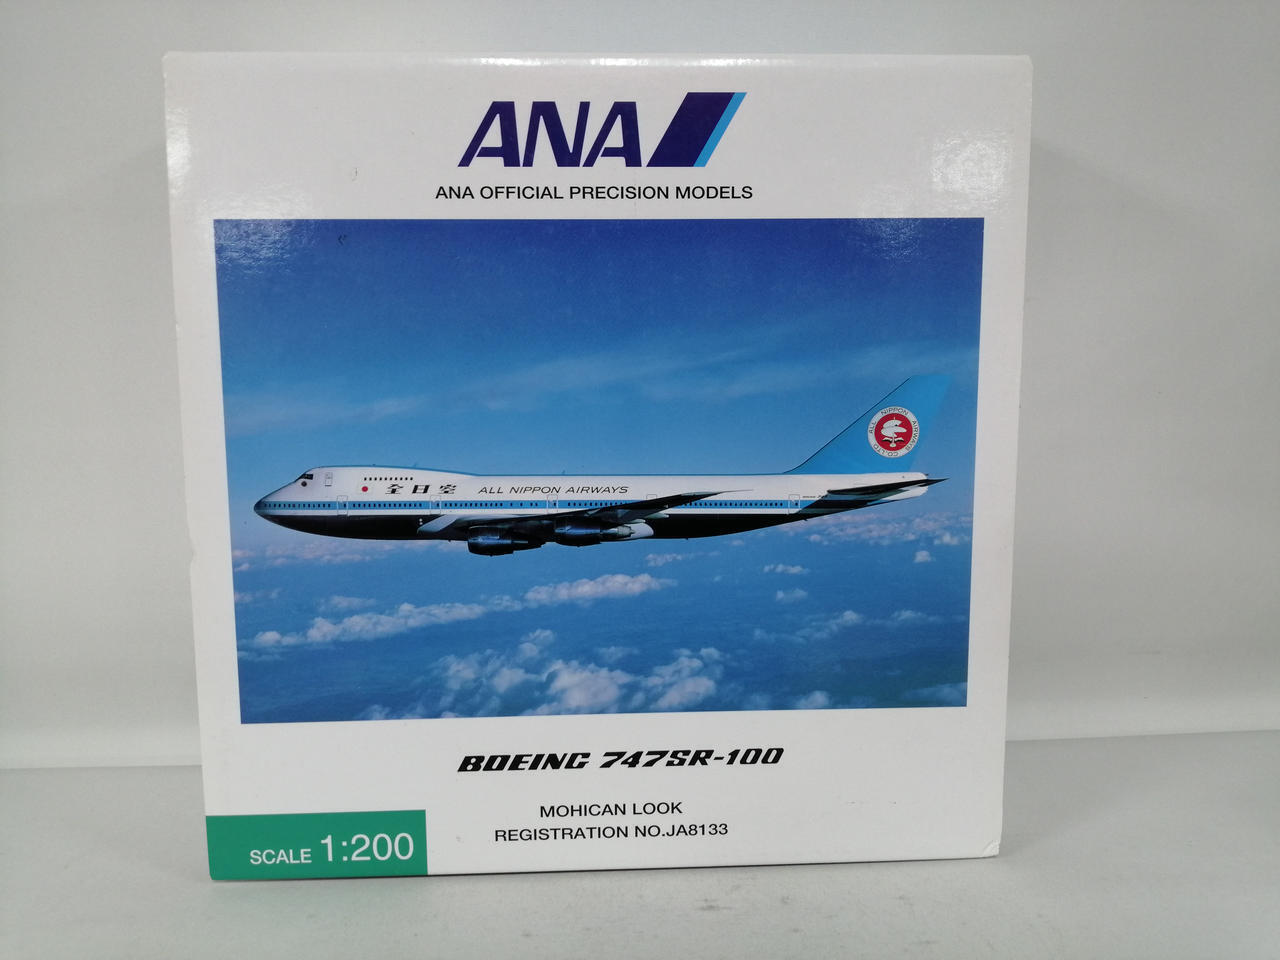 Ana 20014 Boeing 747Sr-100